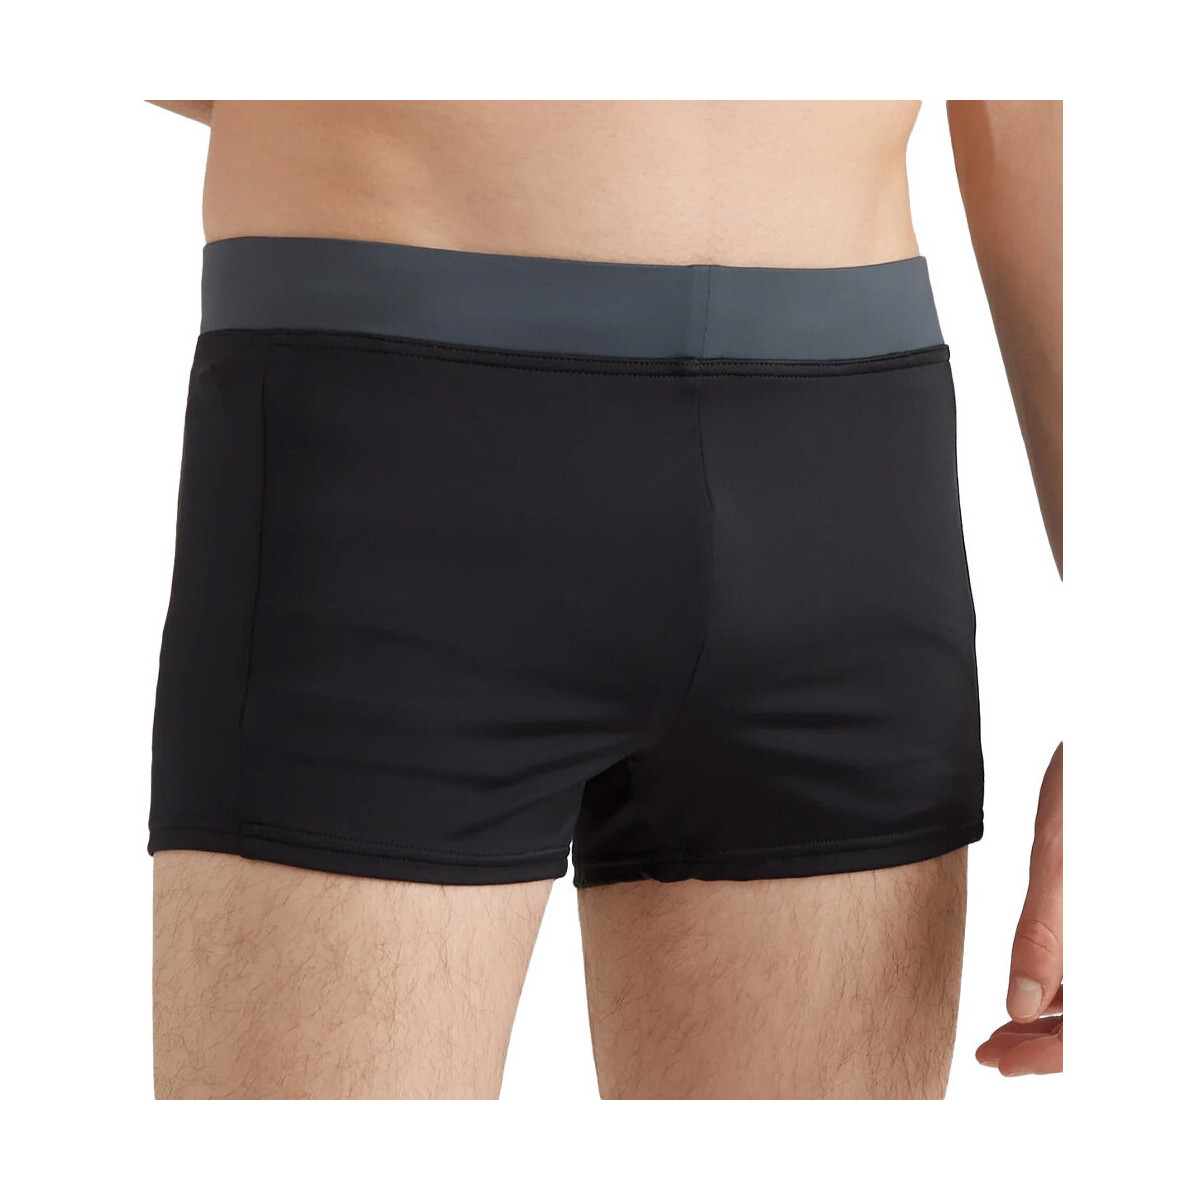 Vêtements Homme Maillots / Shorts de bain O'neill N2800015-19010 Noir